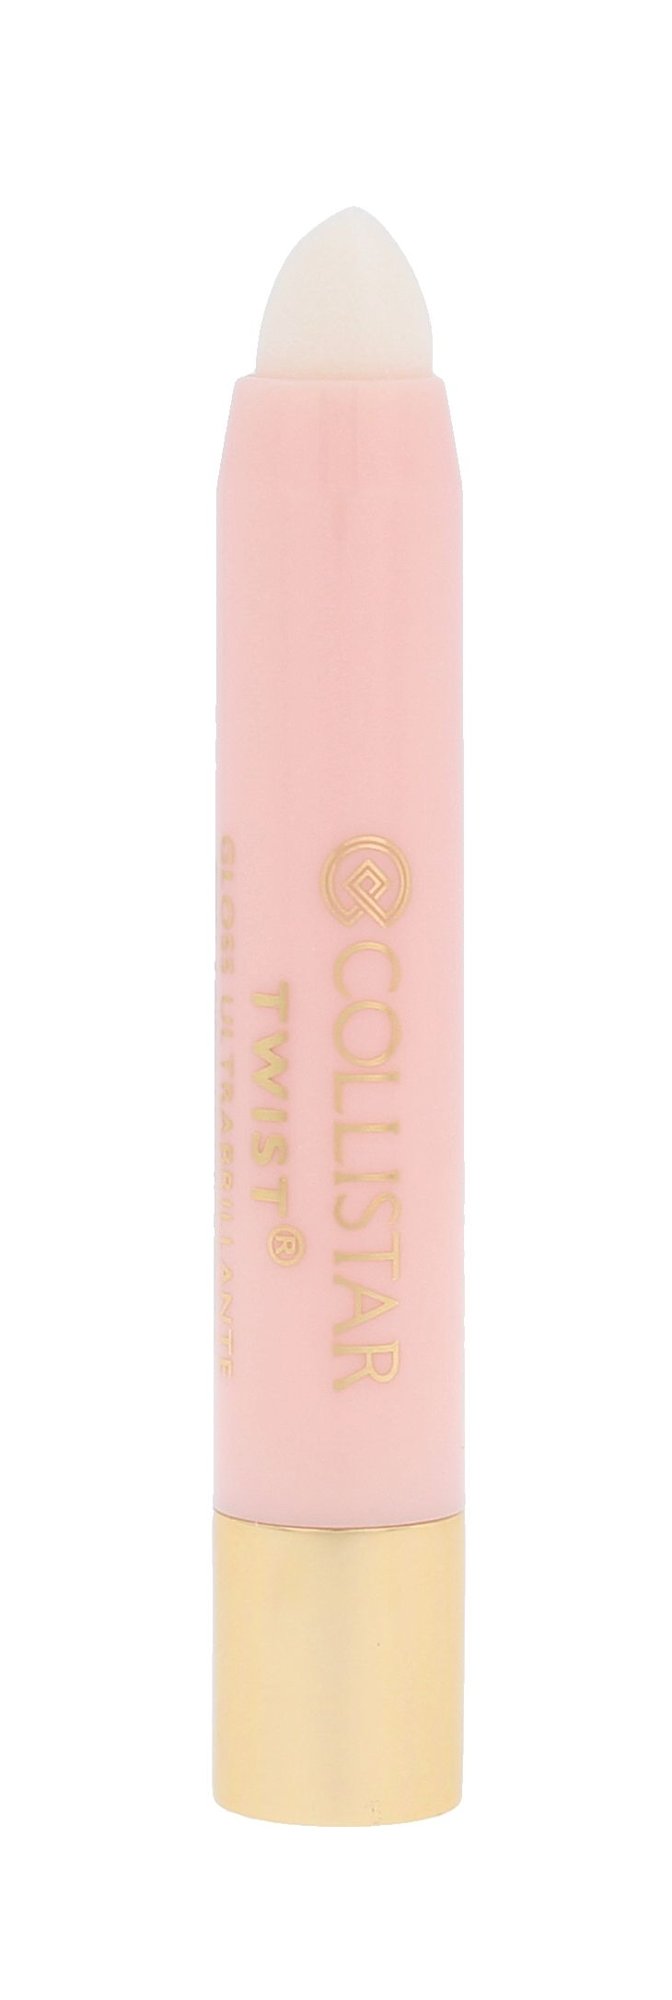 Collistar Twist Ultra-Shiny Gloss 4g lūpų blizgesys